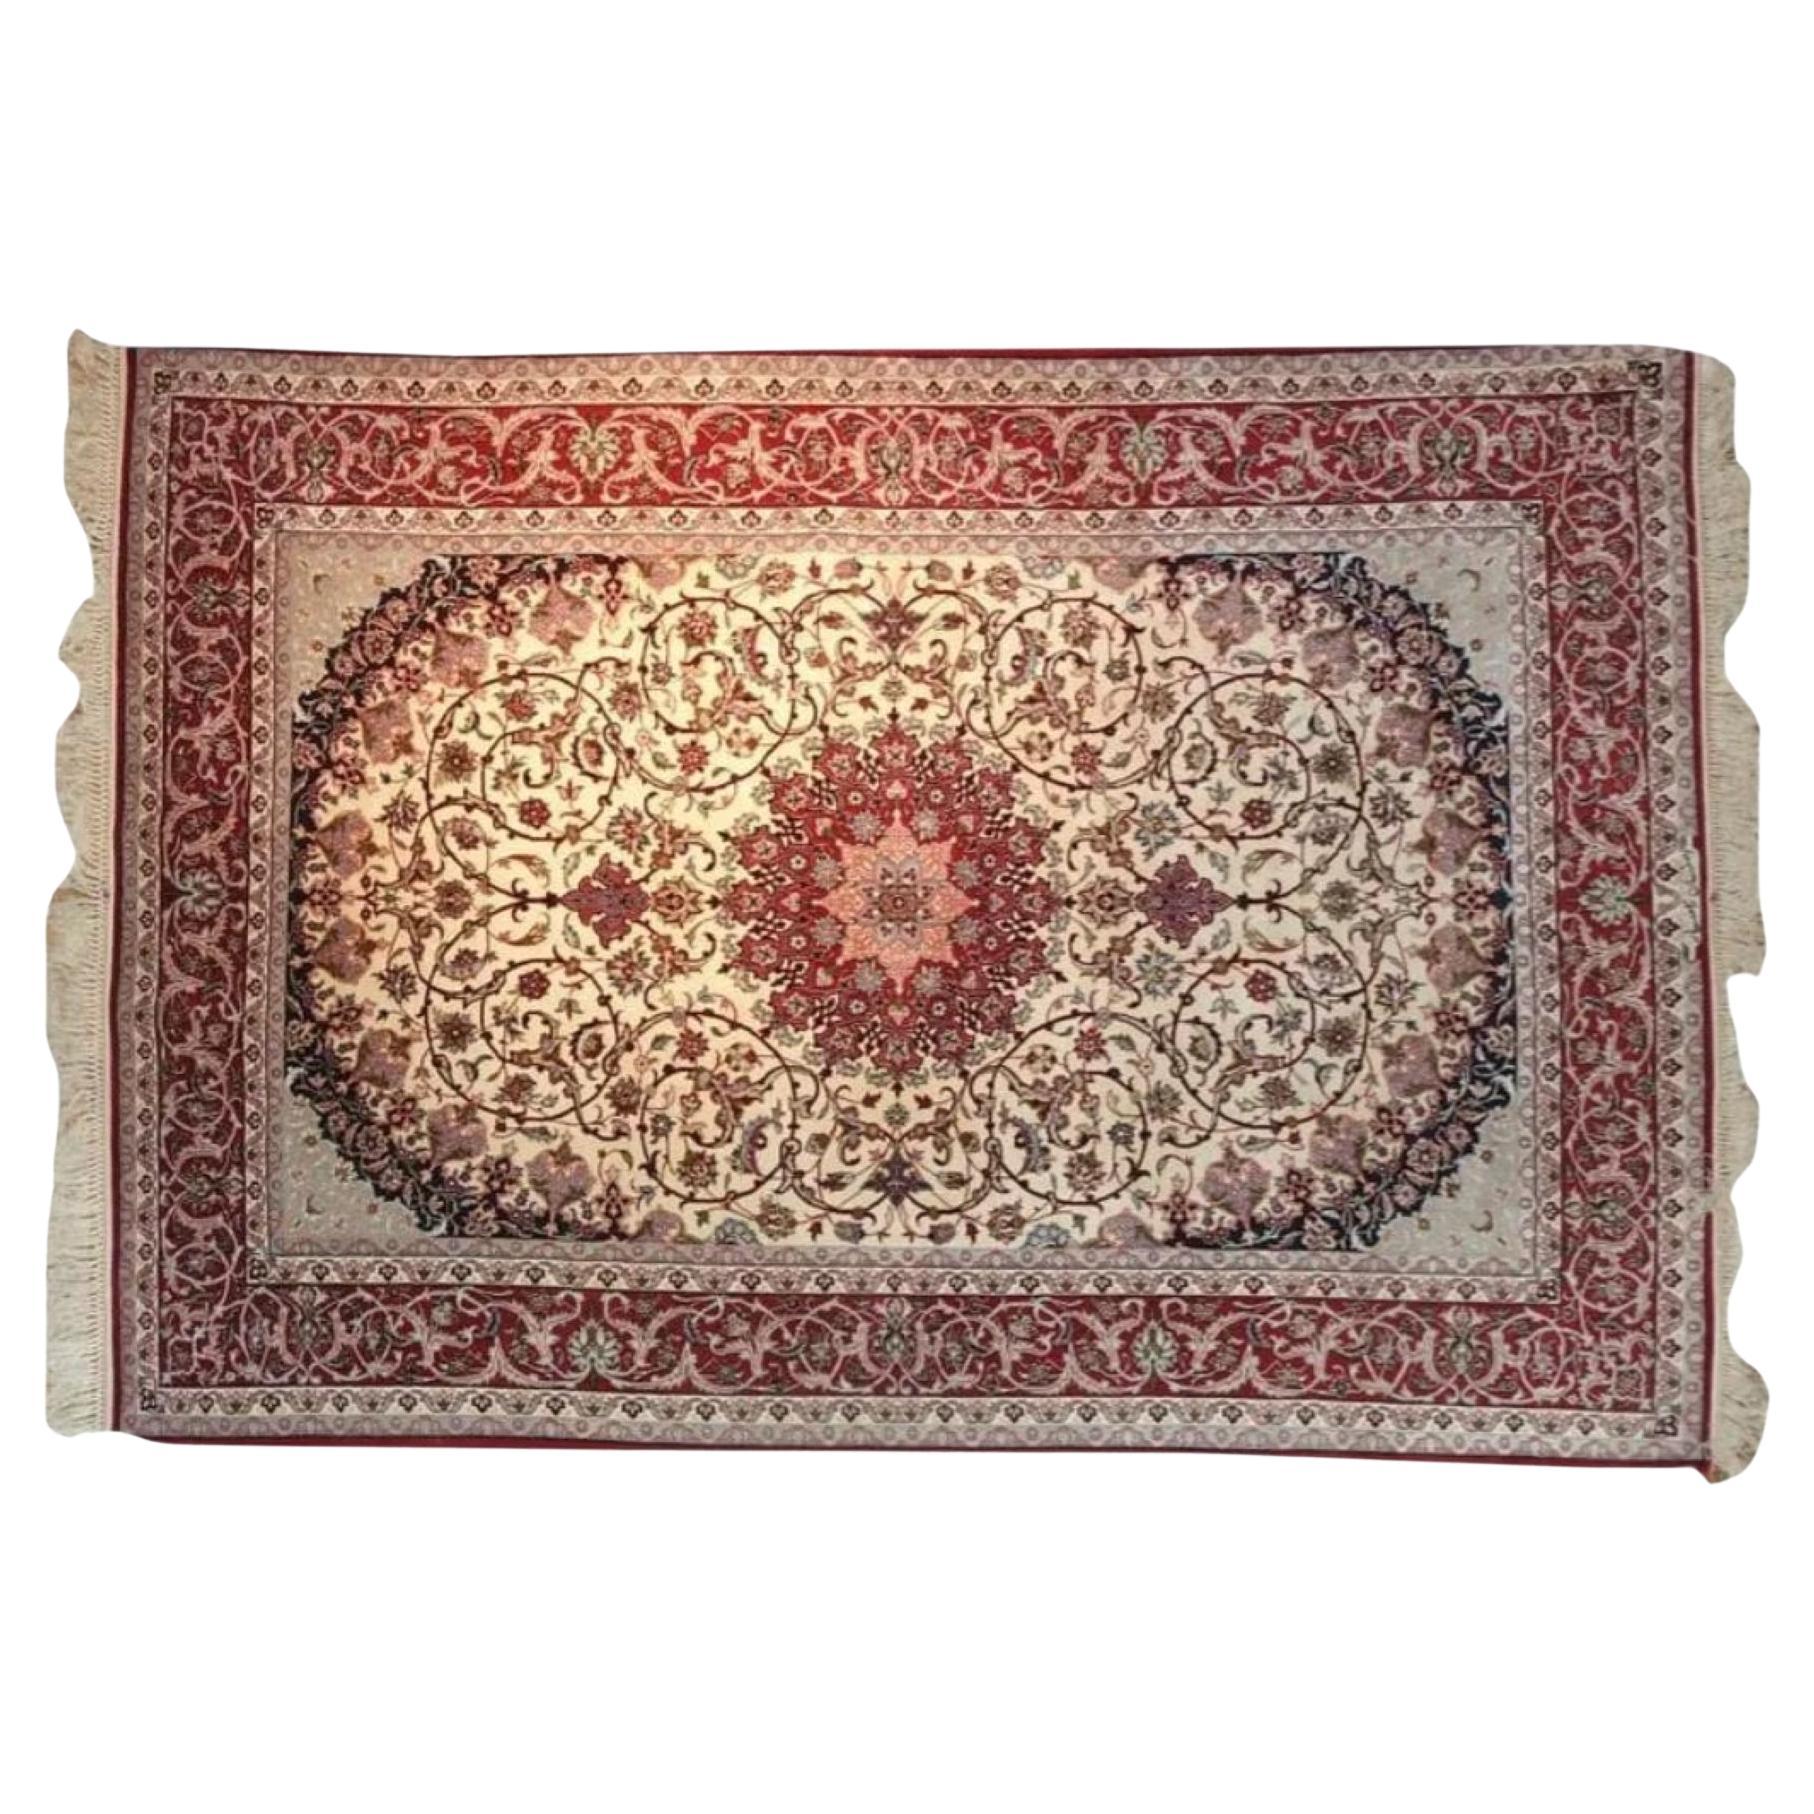 Very fine Persian Silk Ghom - 7.8' x 5.2'